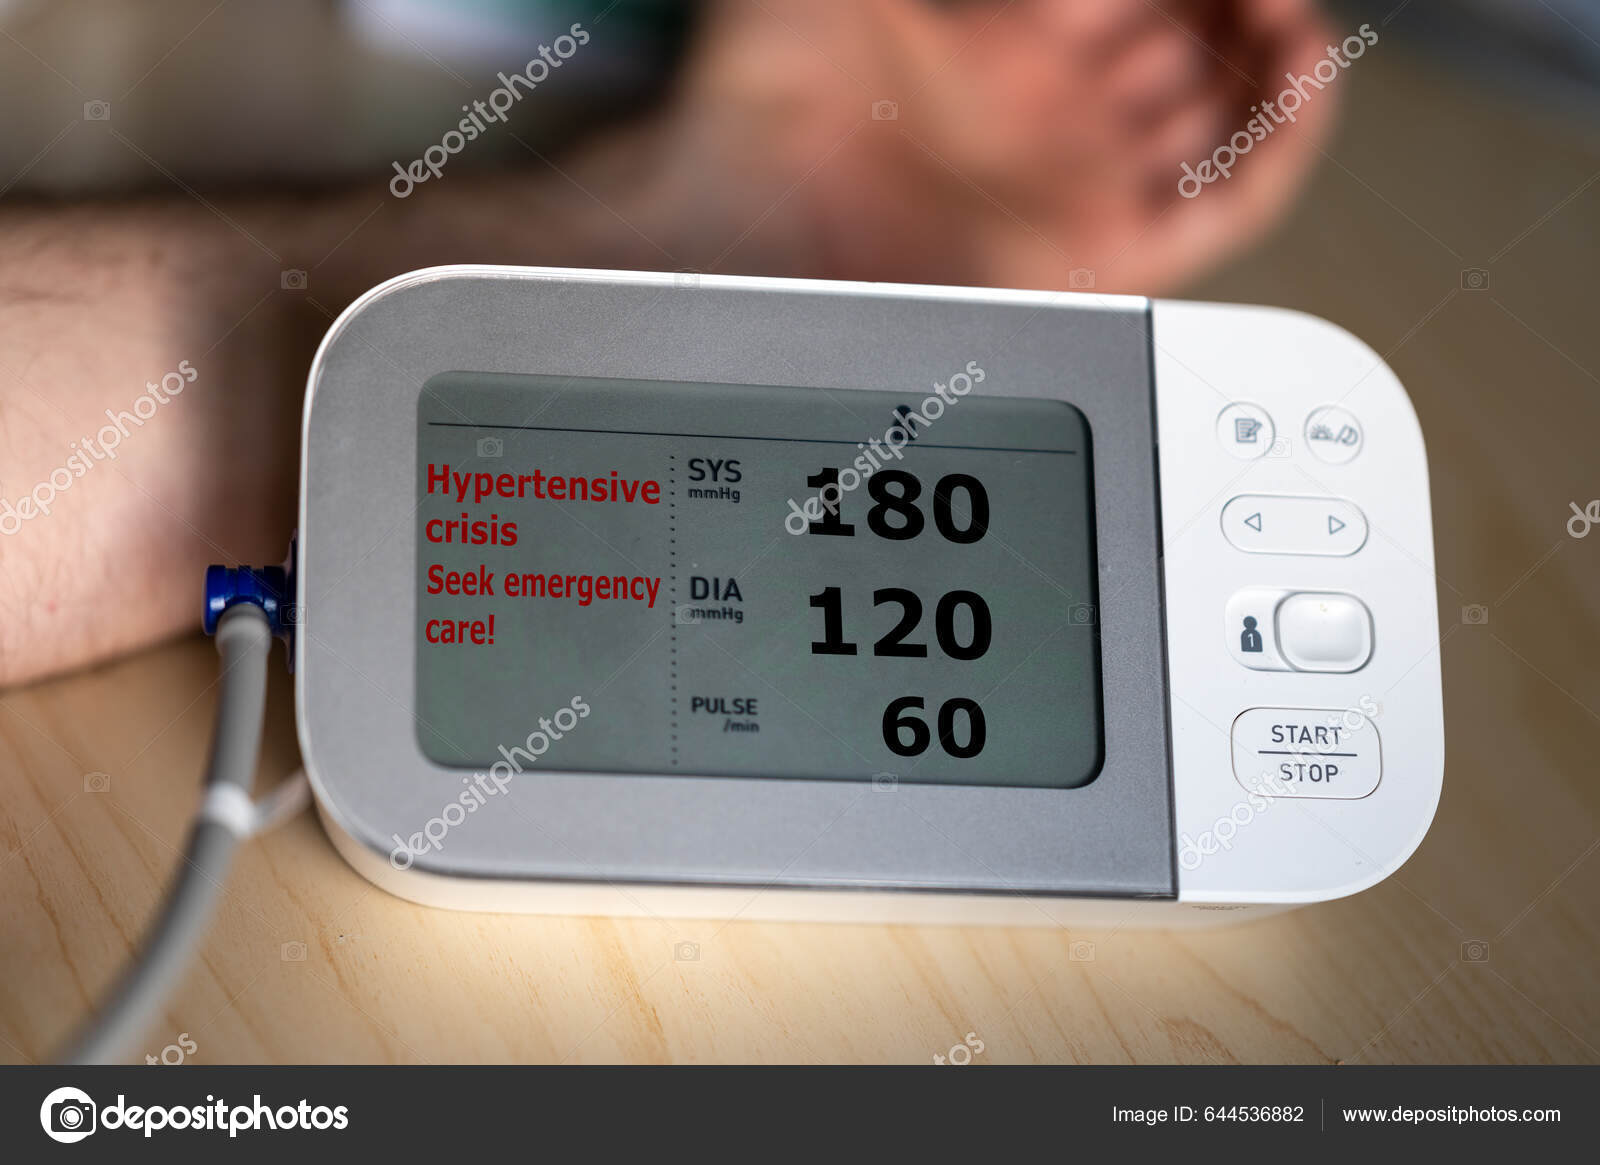 https://st5.depositphotos.com/20602302/64453/i/1600/depositphotos_644536882-stock-photo-blood-pressure-monitor-indicates-high.jpg